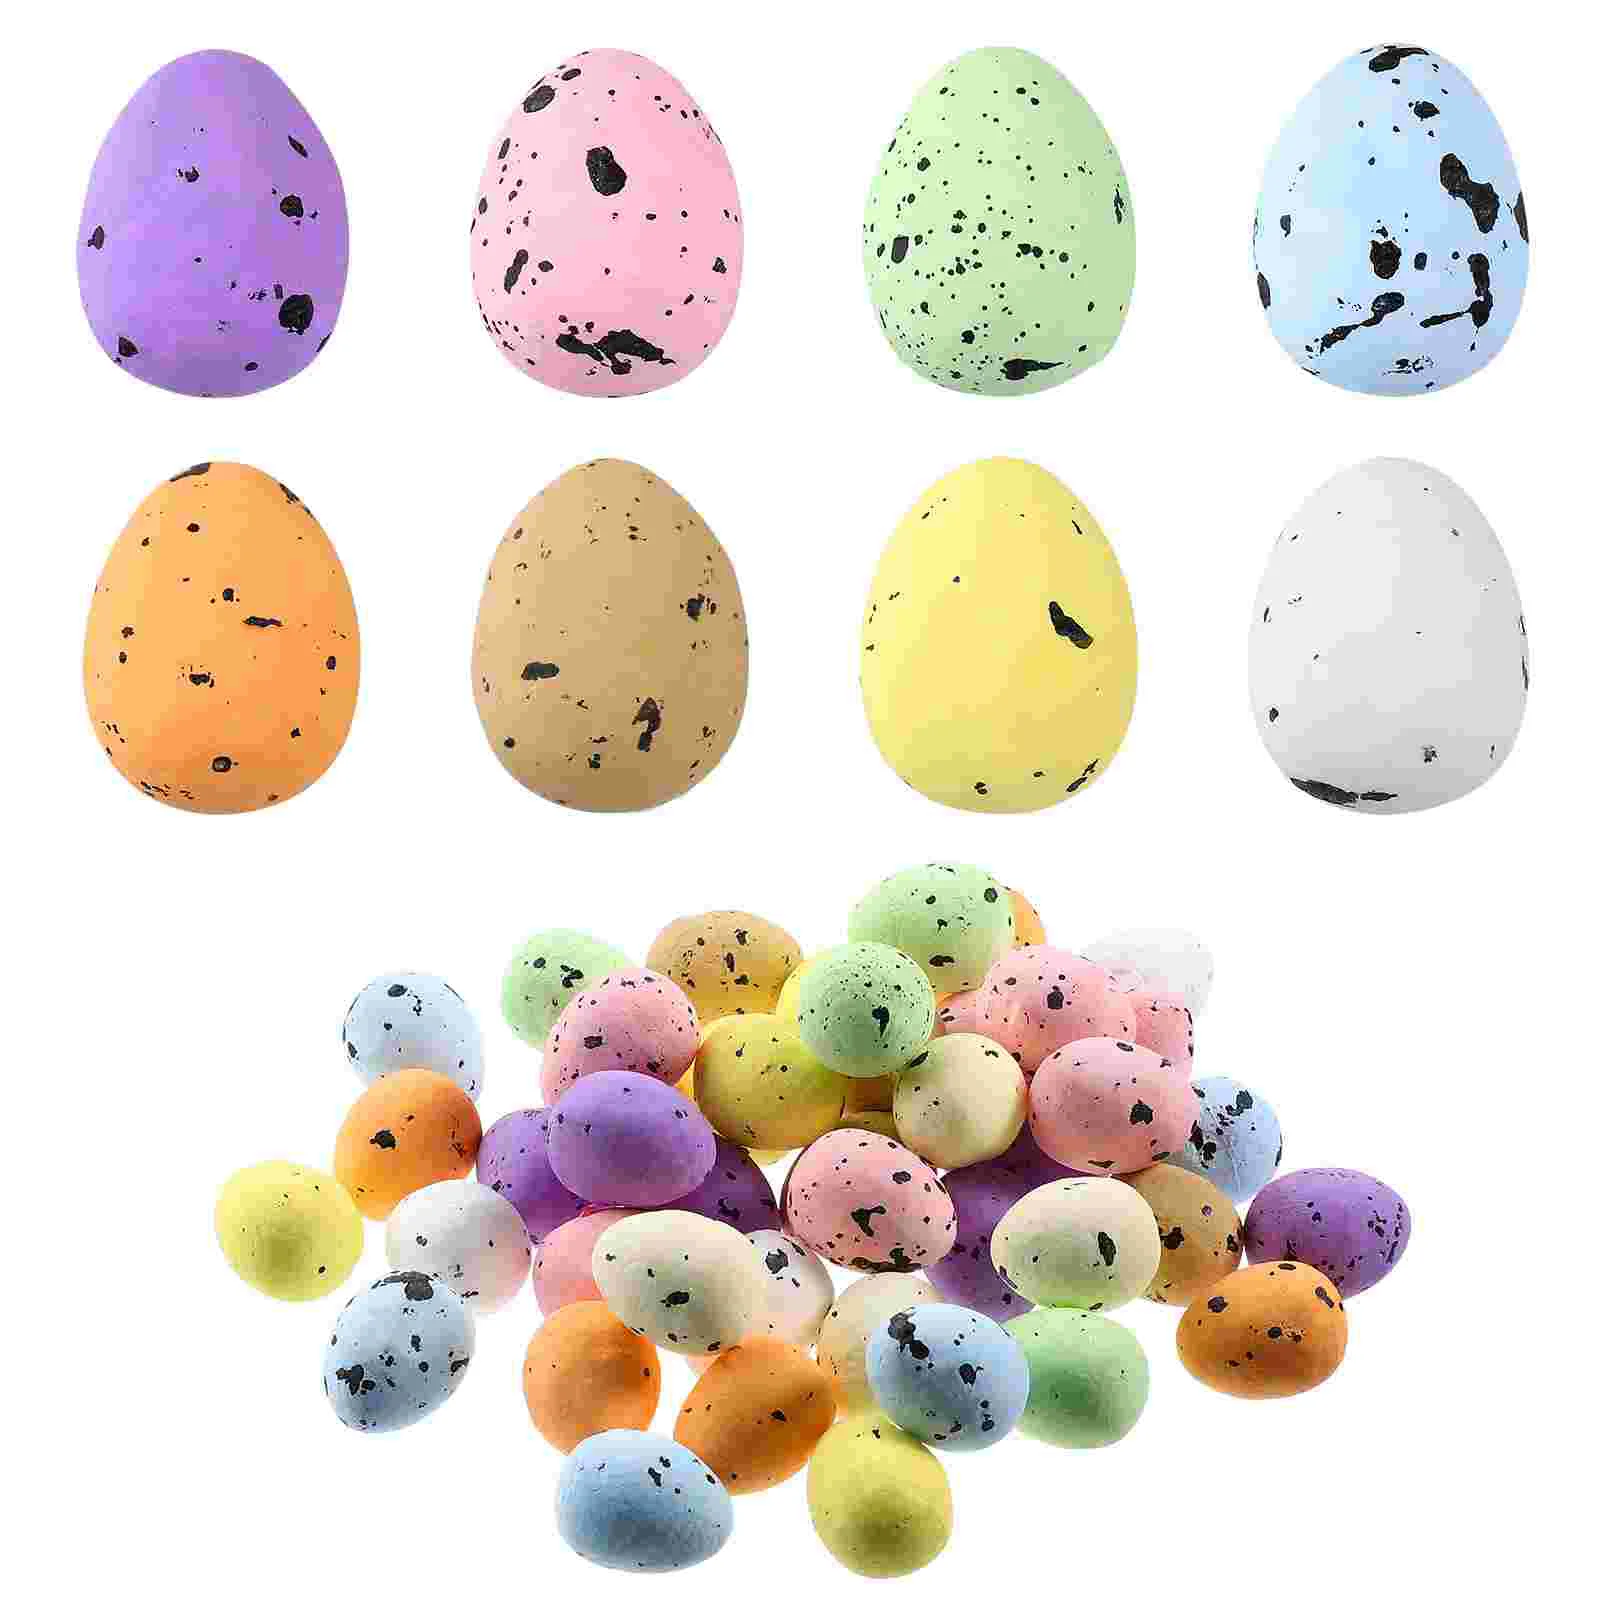 

100 Pcs Desk Topper Foam Eggs Speckled Easter Colorful Ornaments Mini Crafts Miniture Decoration Fake Toy Props Artificial